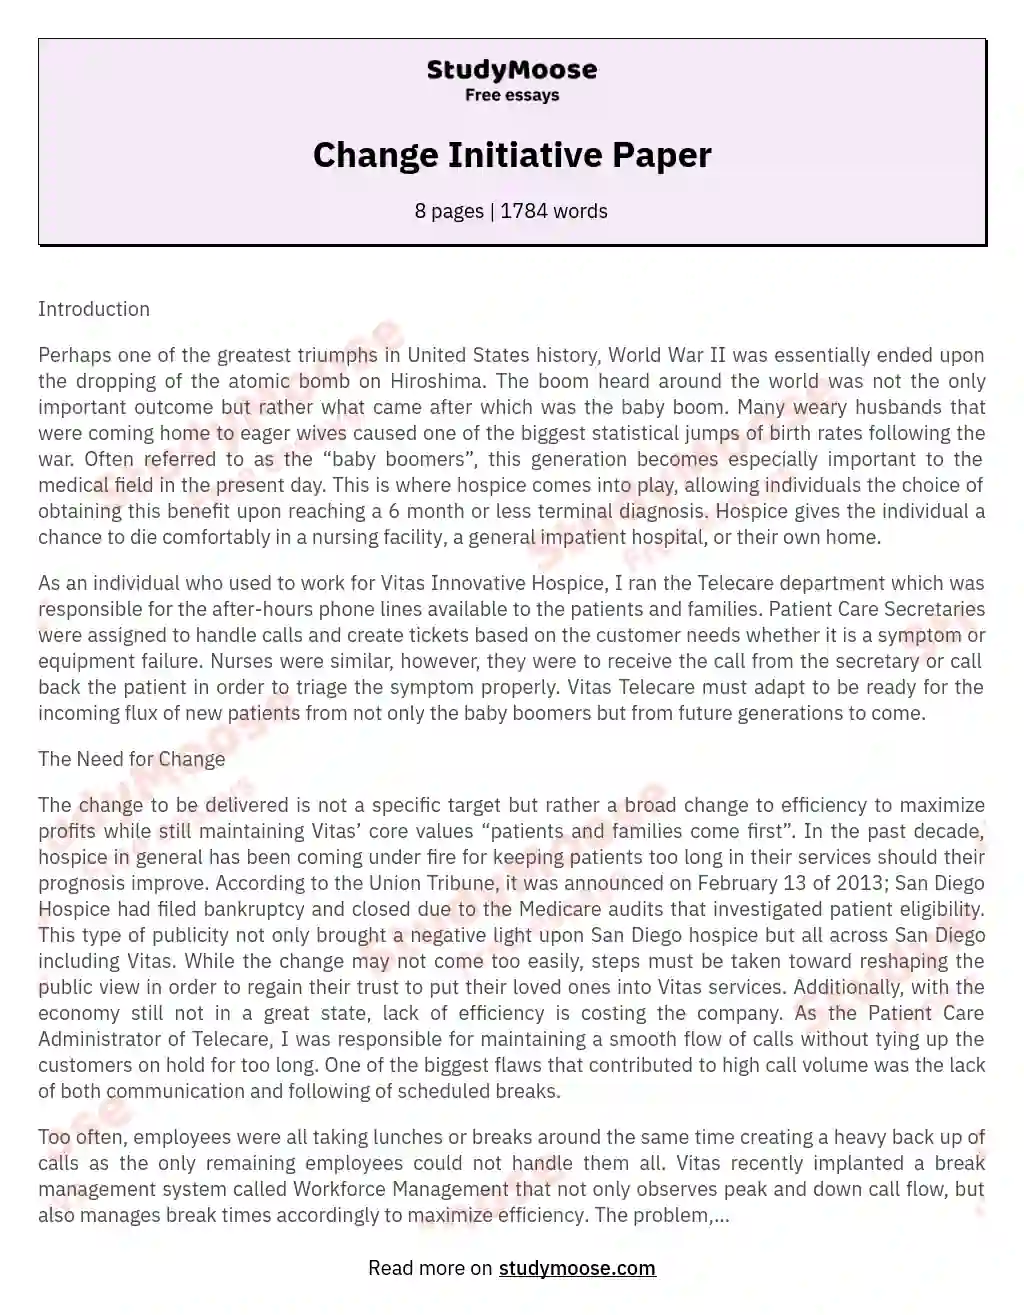 Change Initiative Paper essay